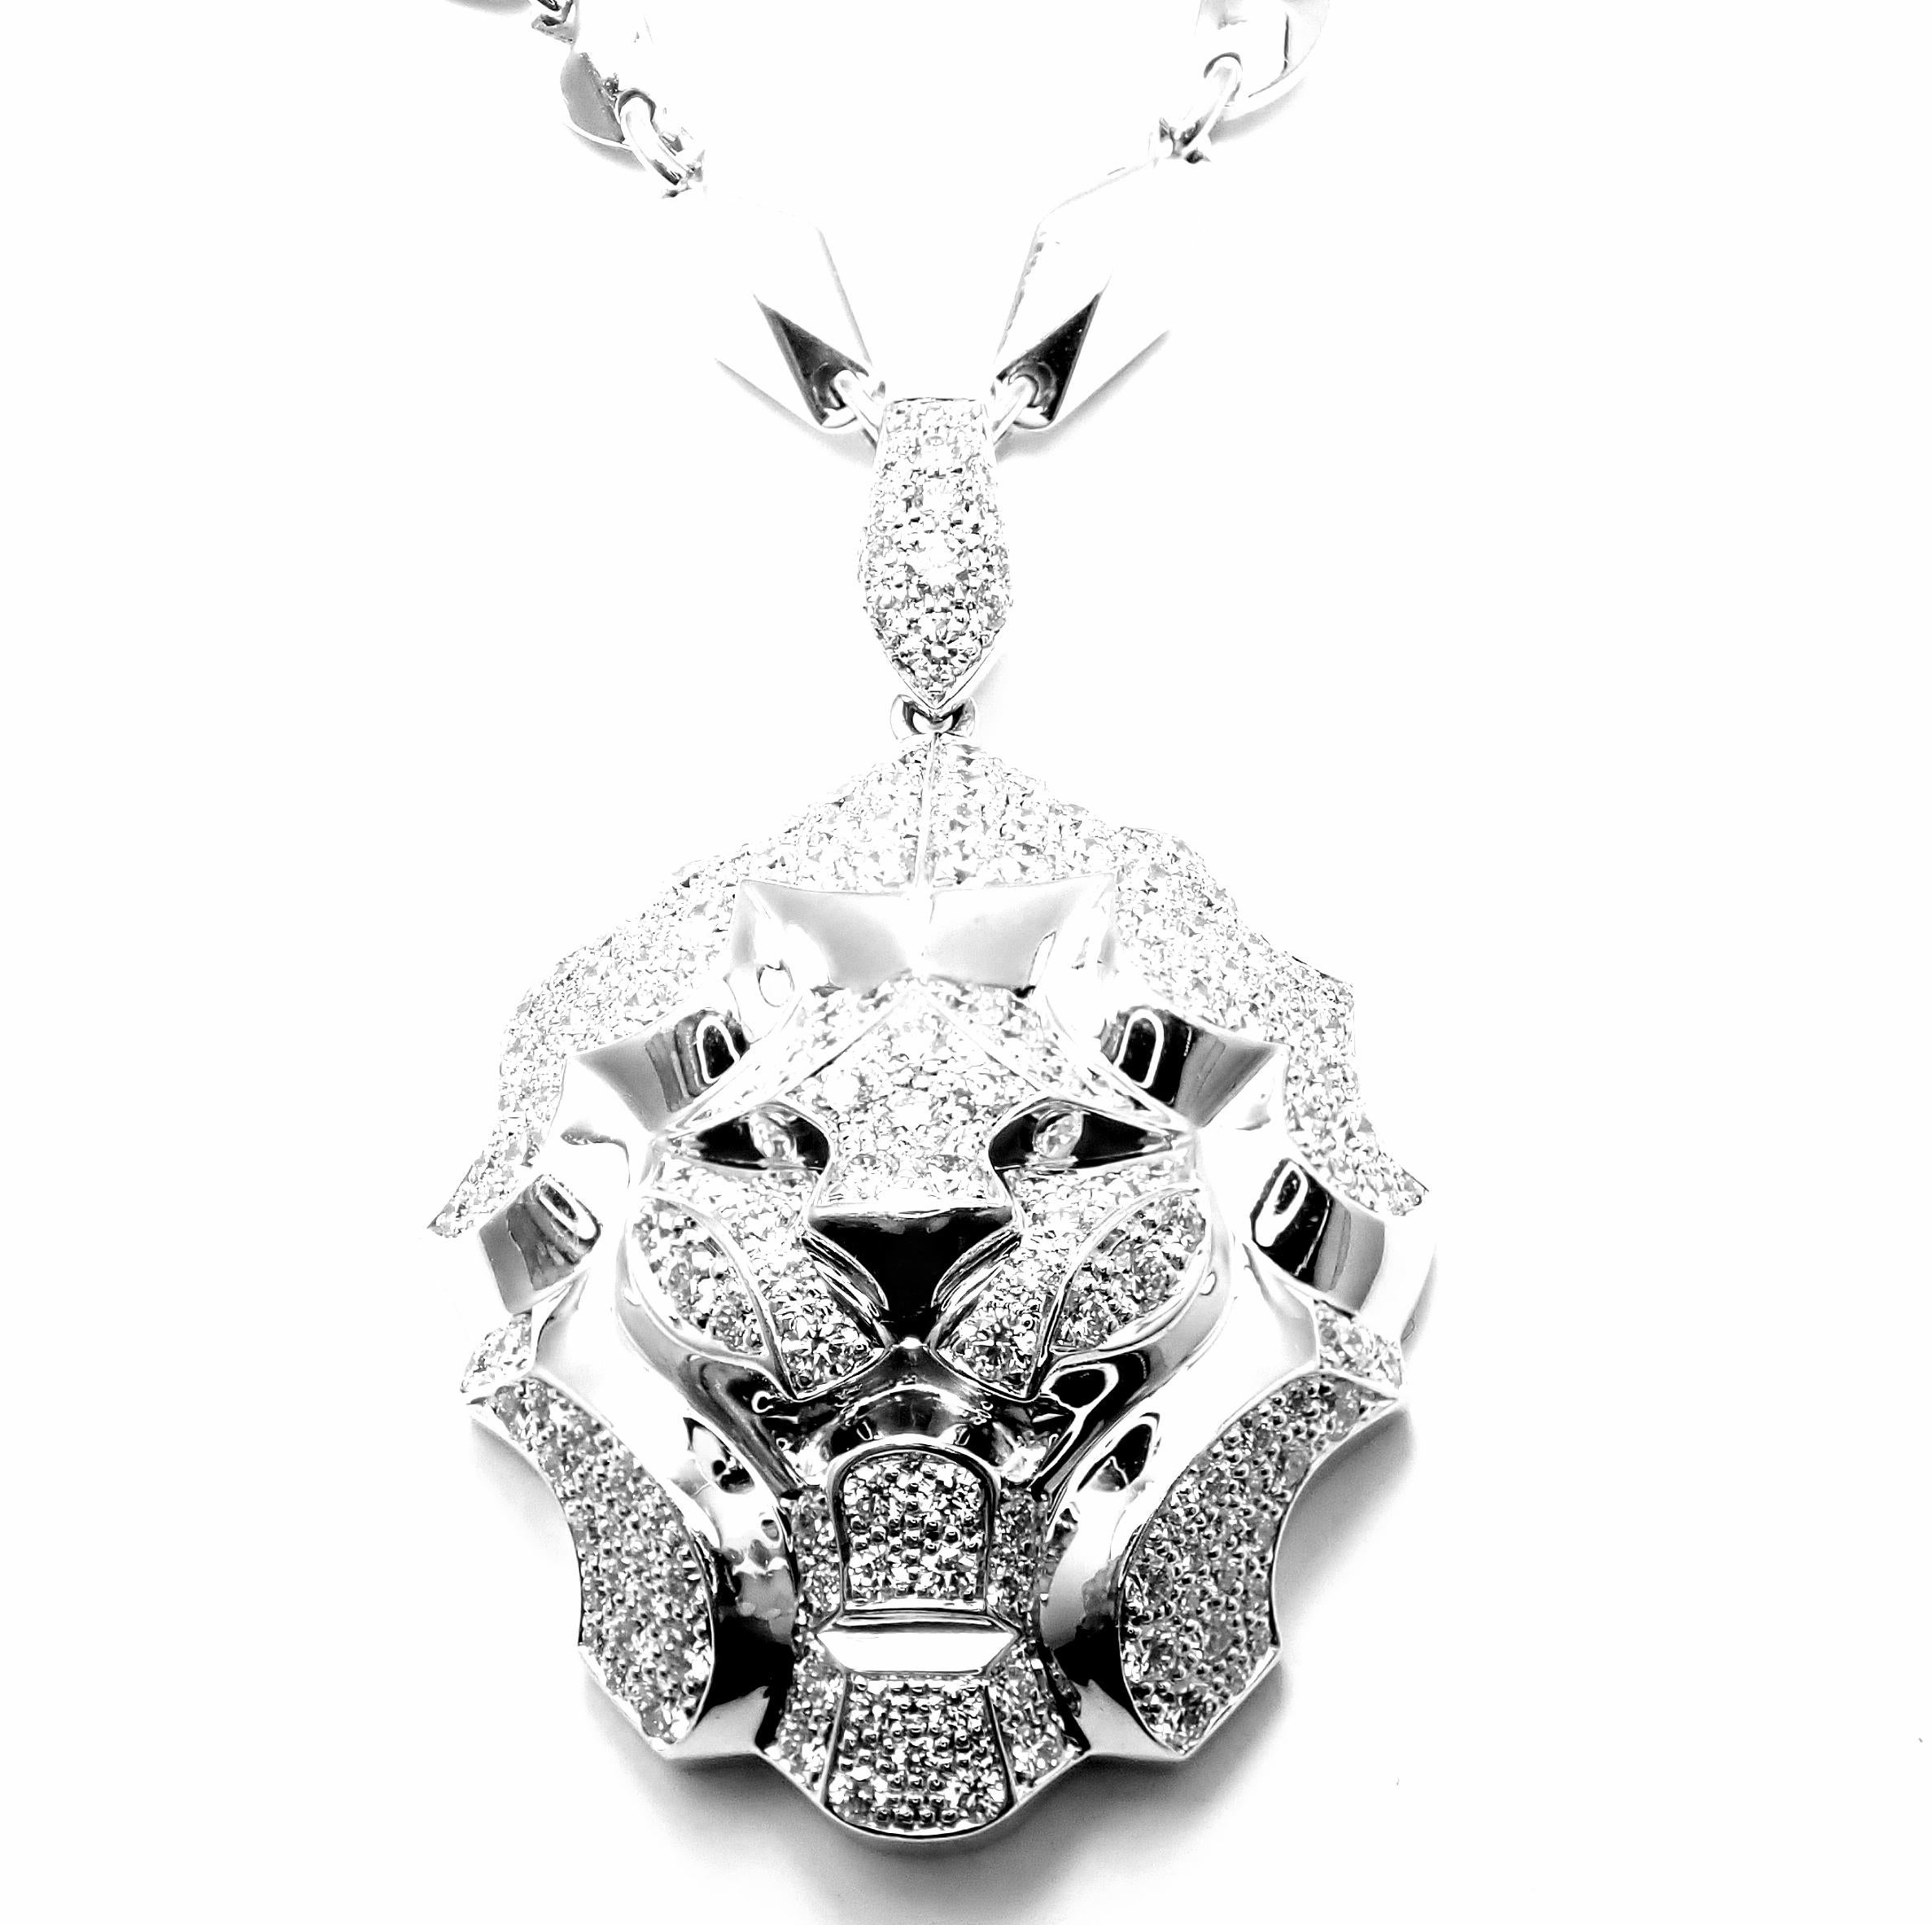 18k White Gold Diamond Sous Le Signe du Lion Pendant Necklace by Chanel. 
With 203 round brilliant cut diamonds VS1 clarity E color total weight approx. 3ct
Details: 
Length: 17